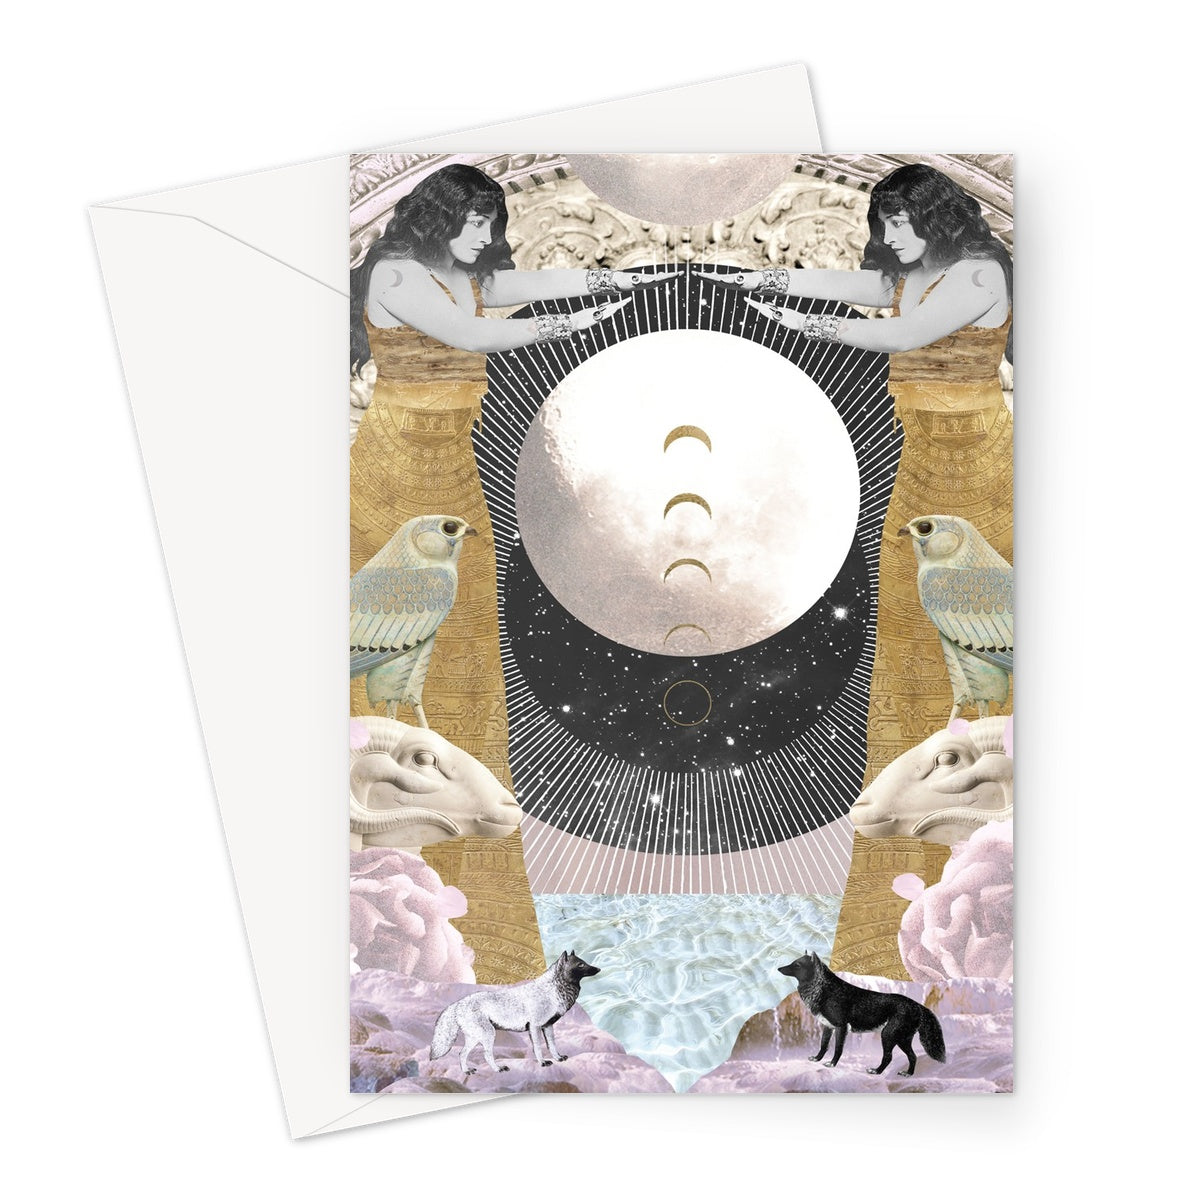 The Moon Greeting Card - Starseed Designs Inc.